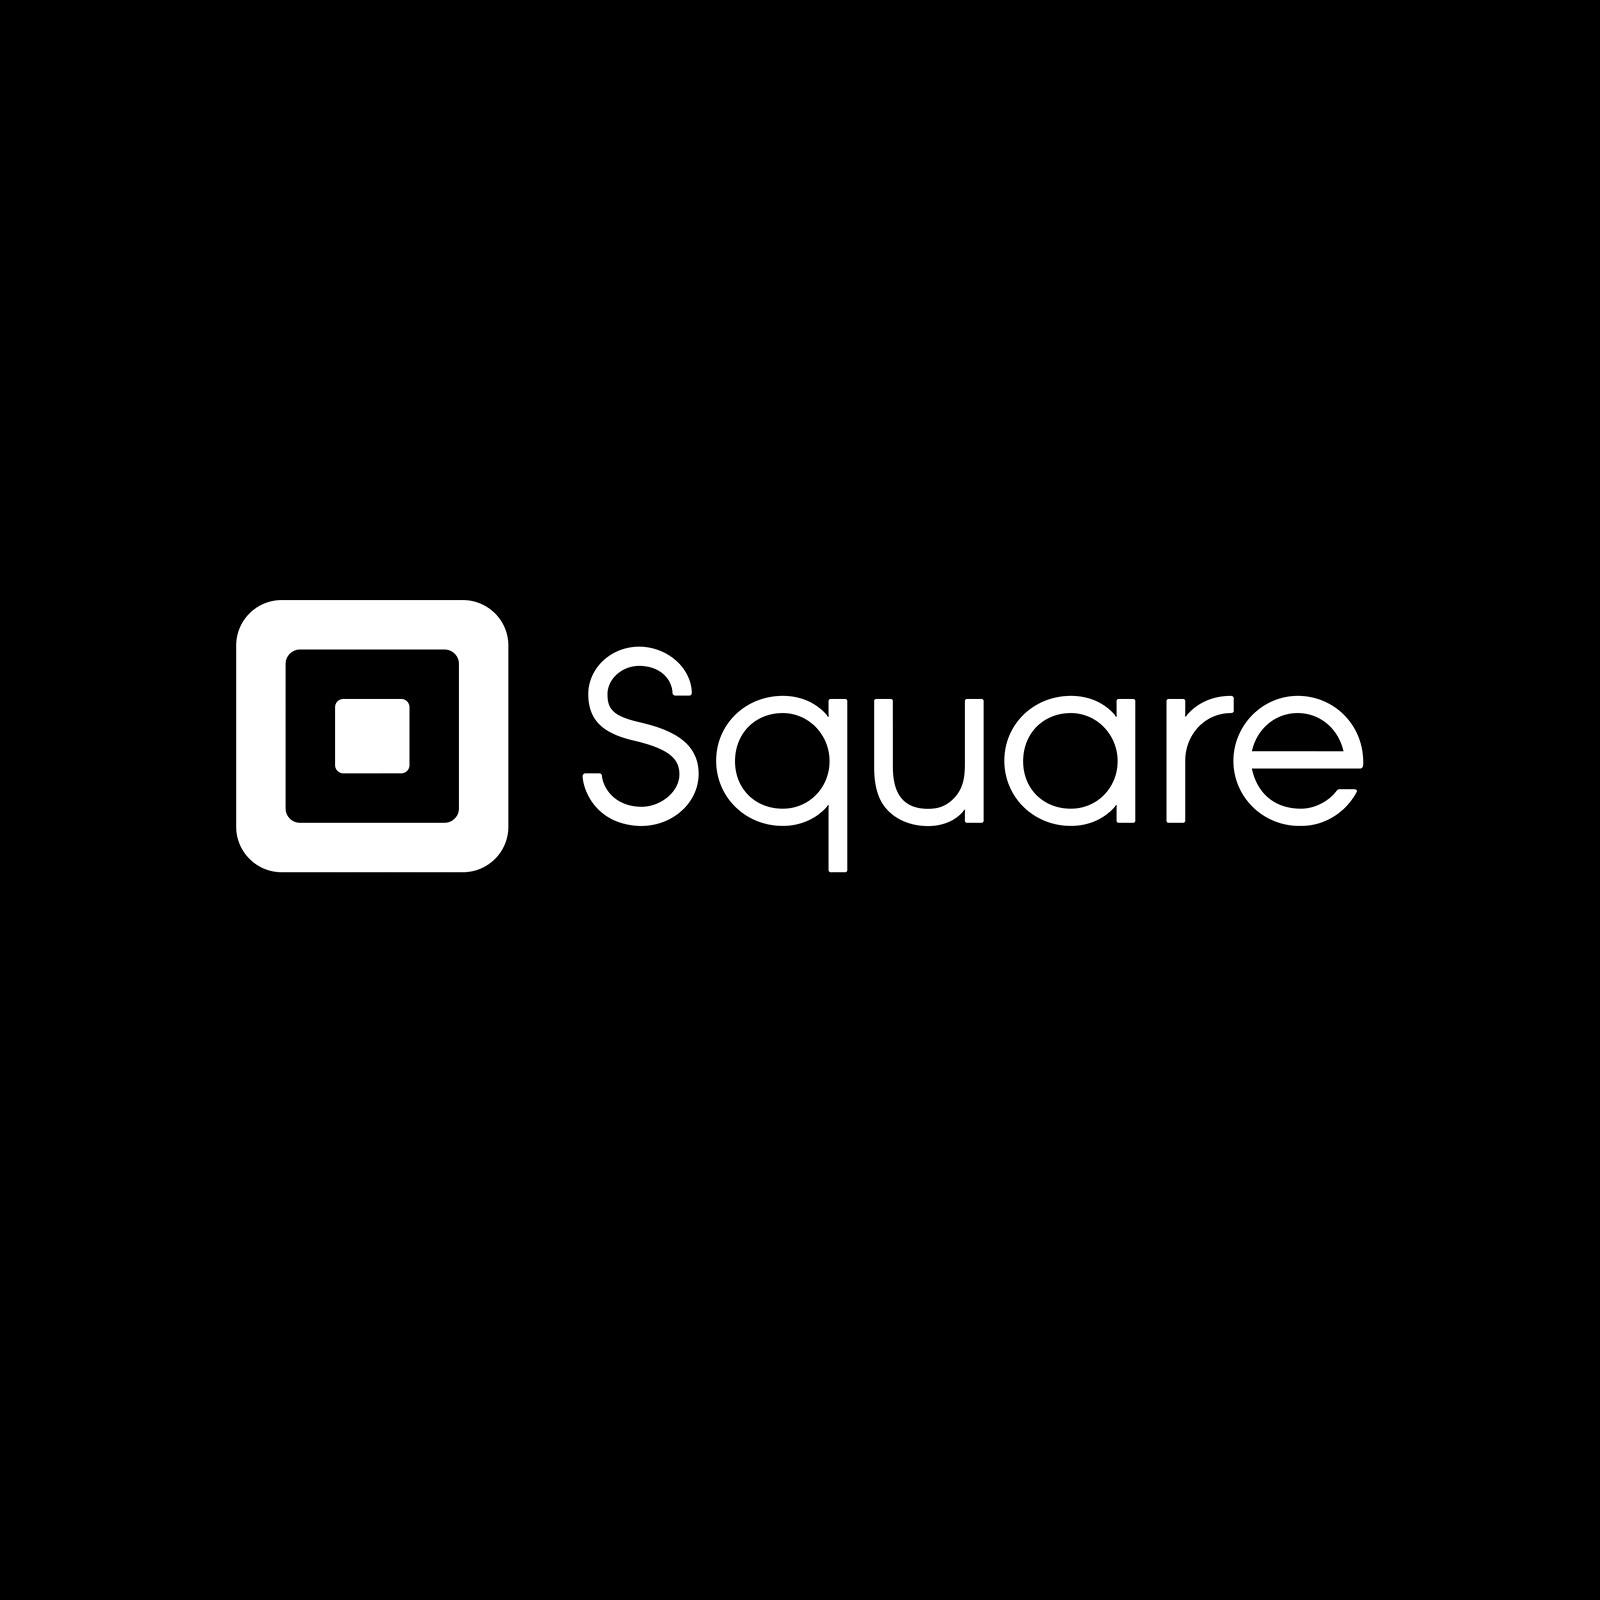 Open Square Logo - Square Logo White.jpeg